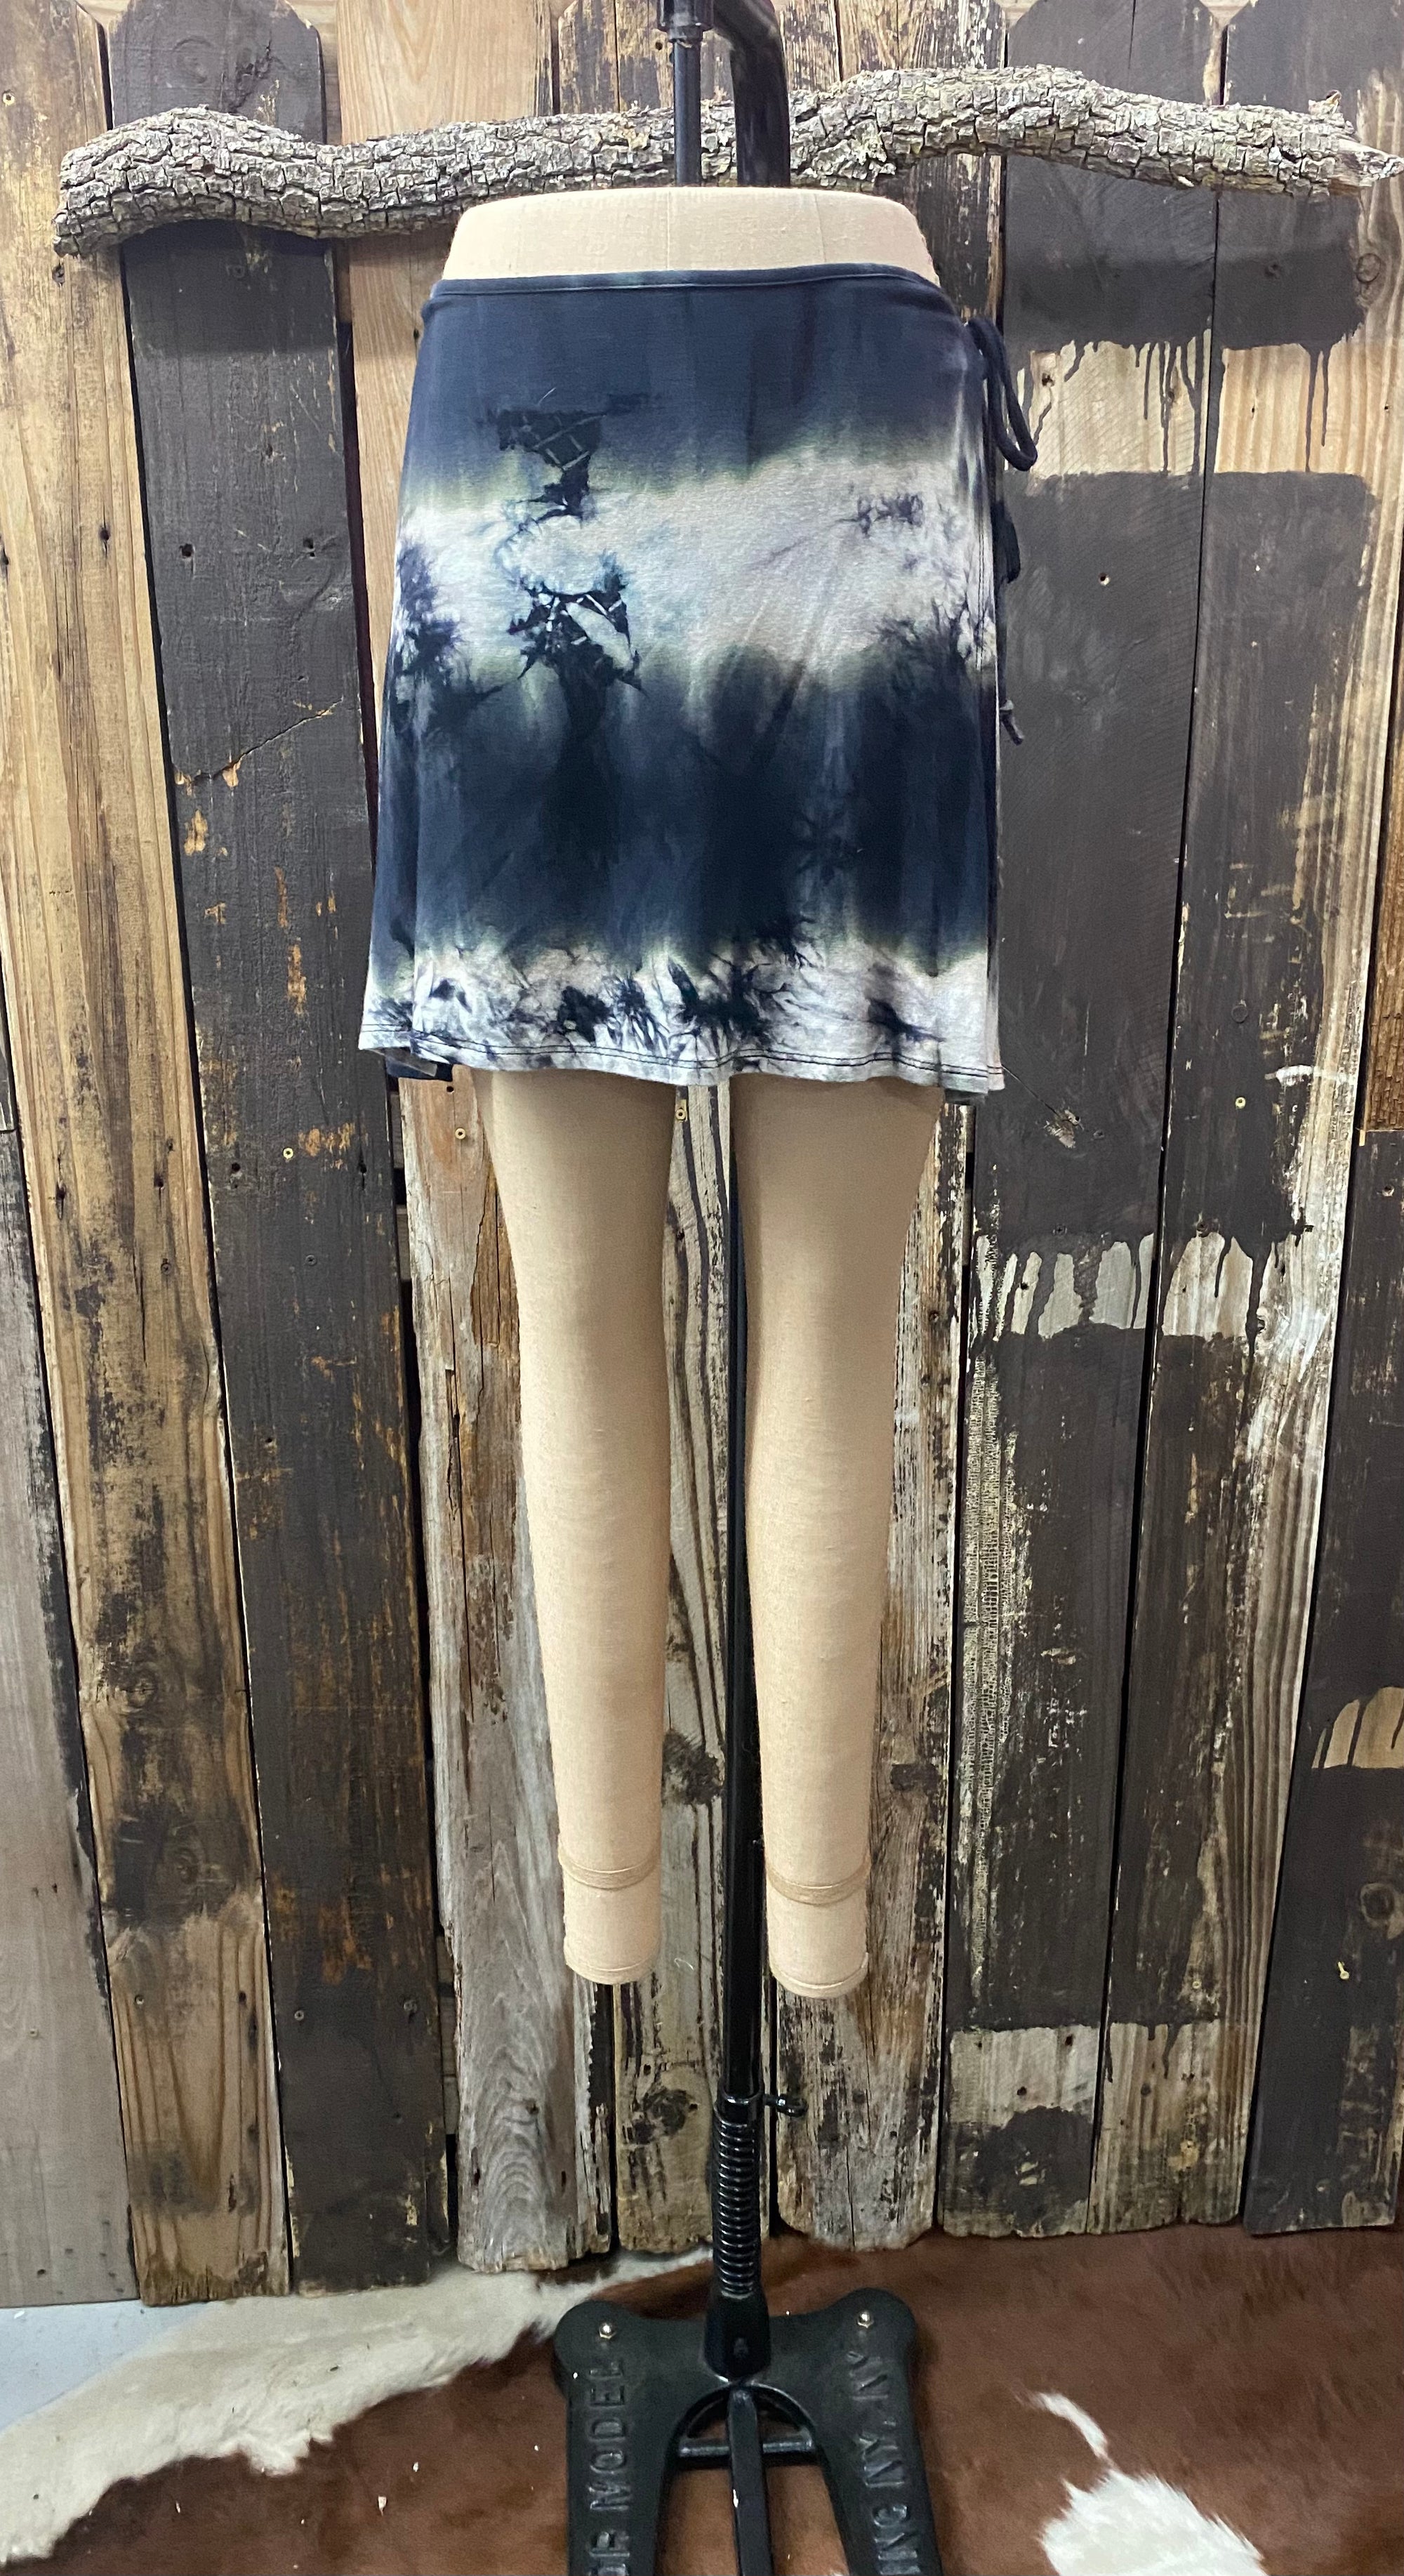 Floral Activewear Skirt ~ Size L ~ Queen Bee’s Closet #404